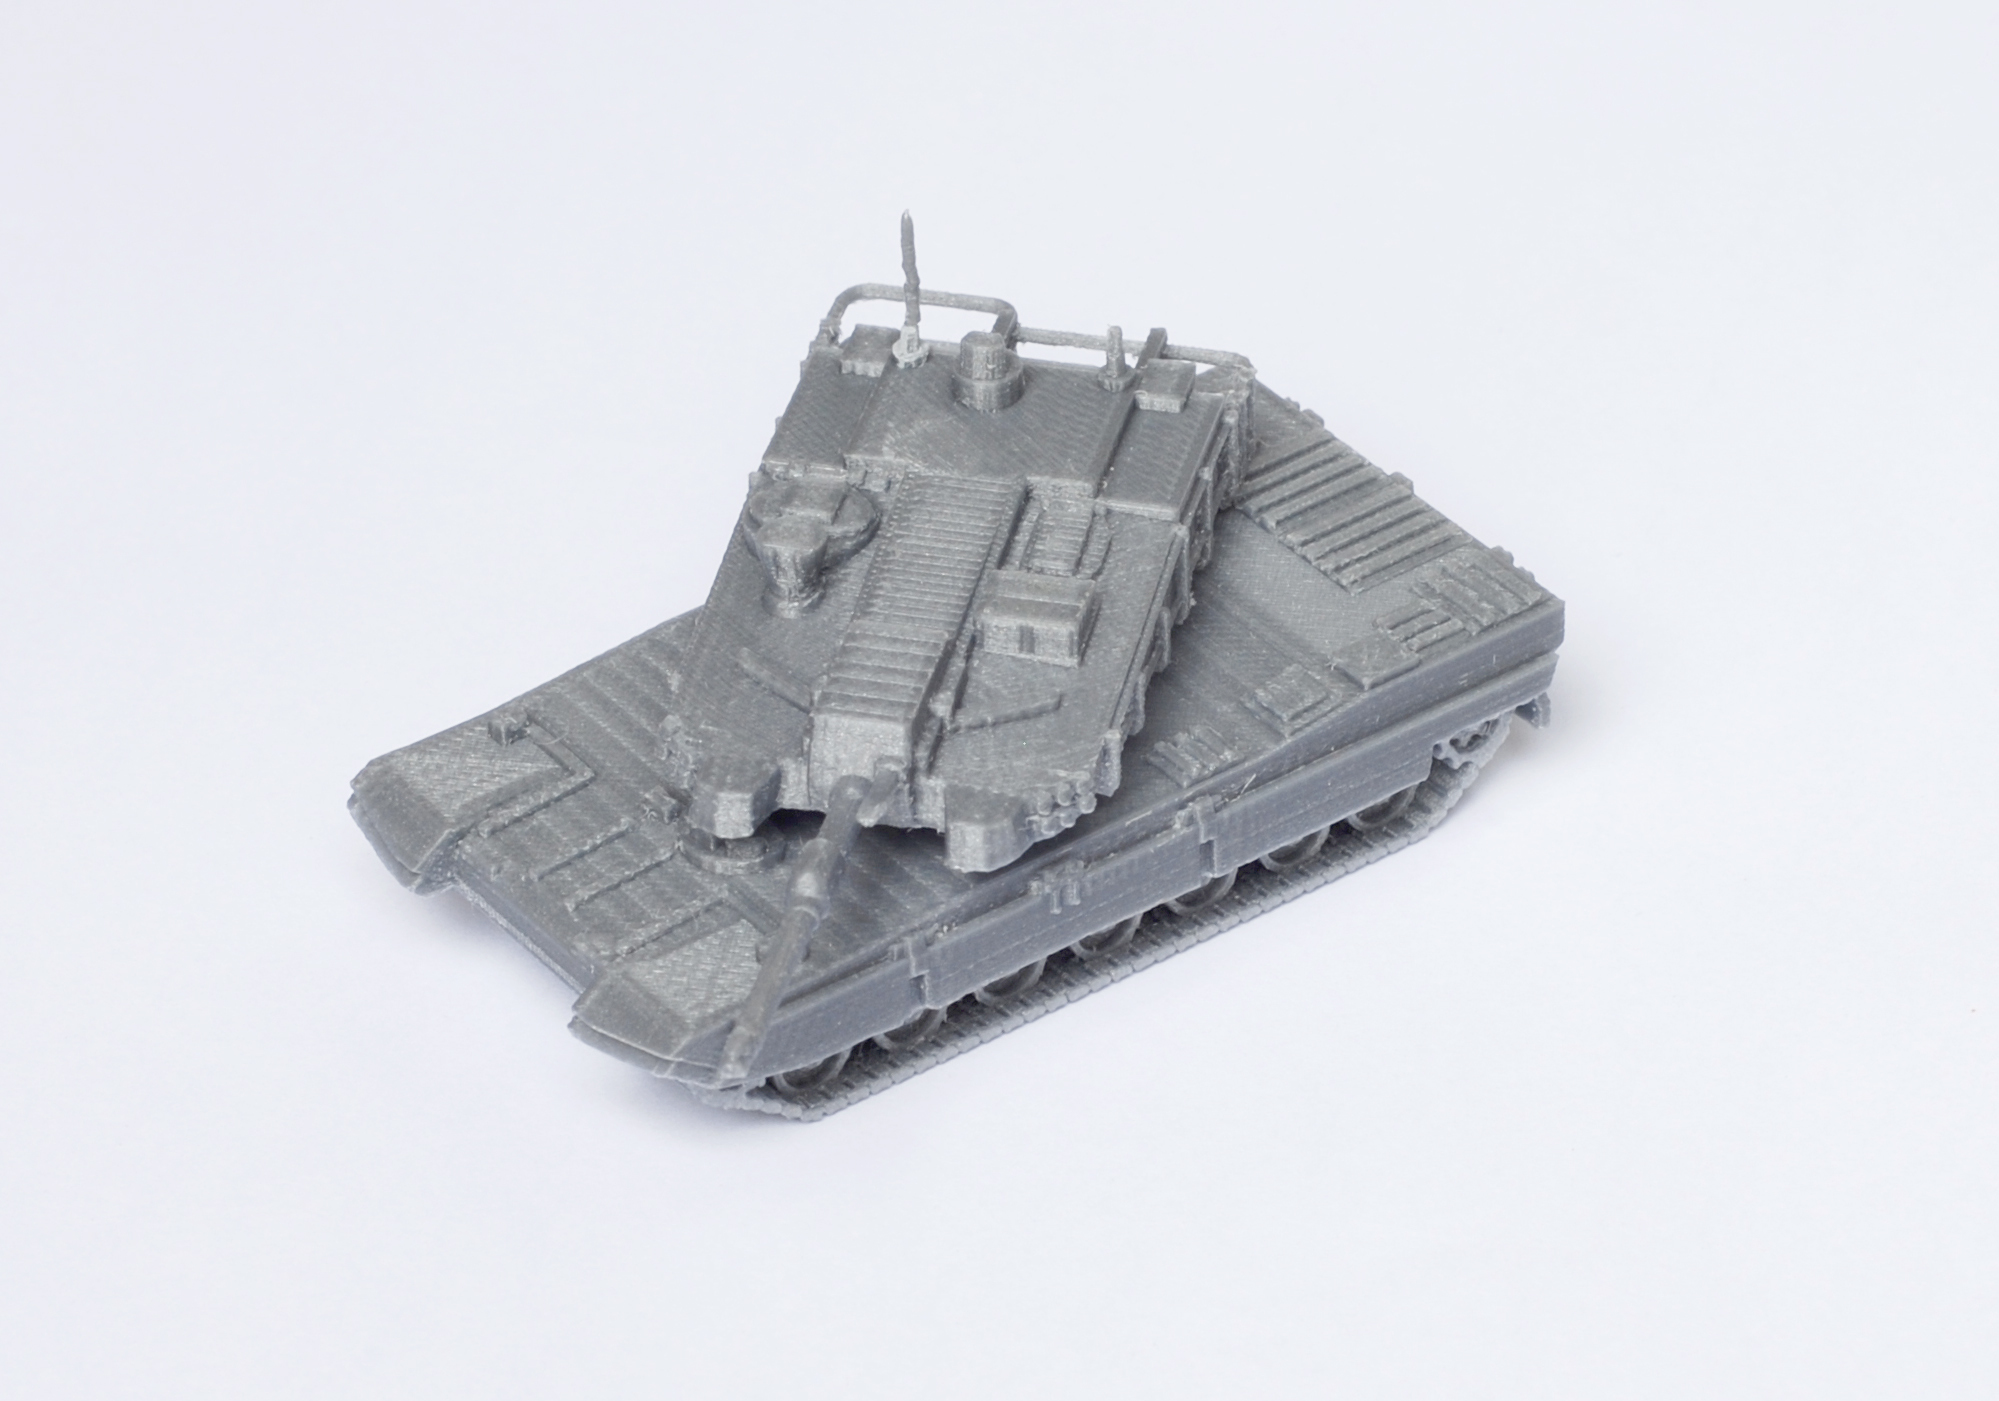 3D Printed K2 Black Panther Tank Simple Model Kit by FORMBYTE